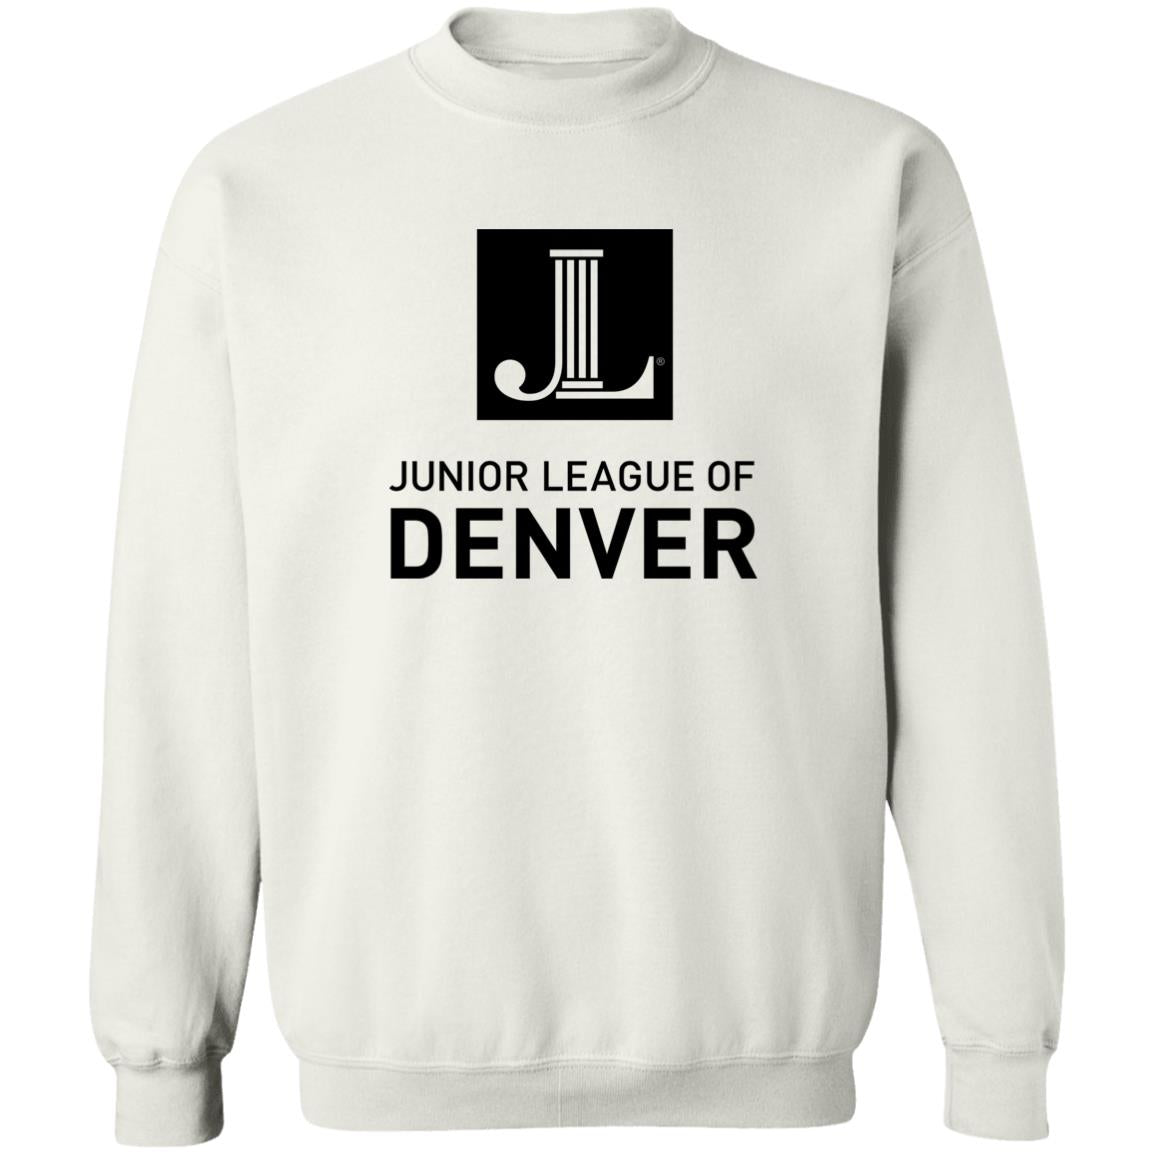 Inspire & Impact Jr League Crewneck Sweatshirt